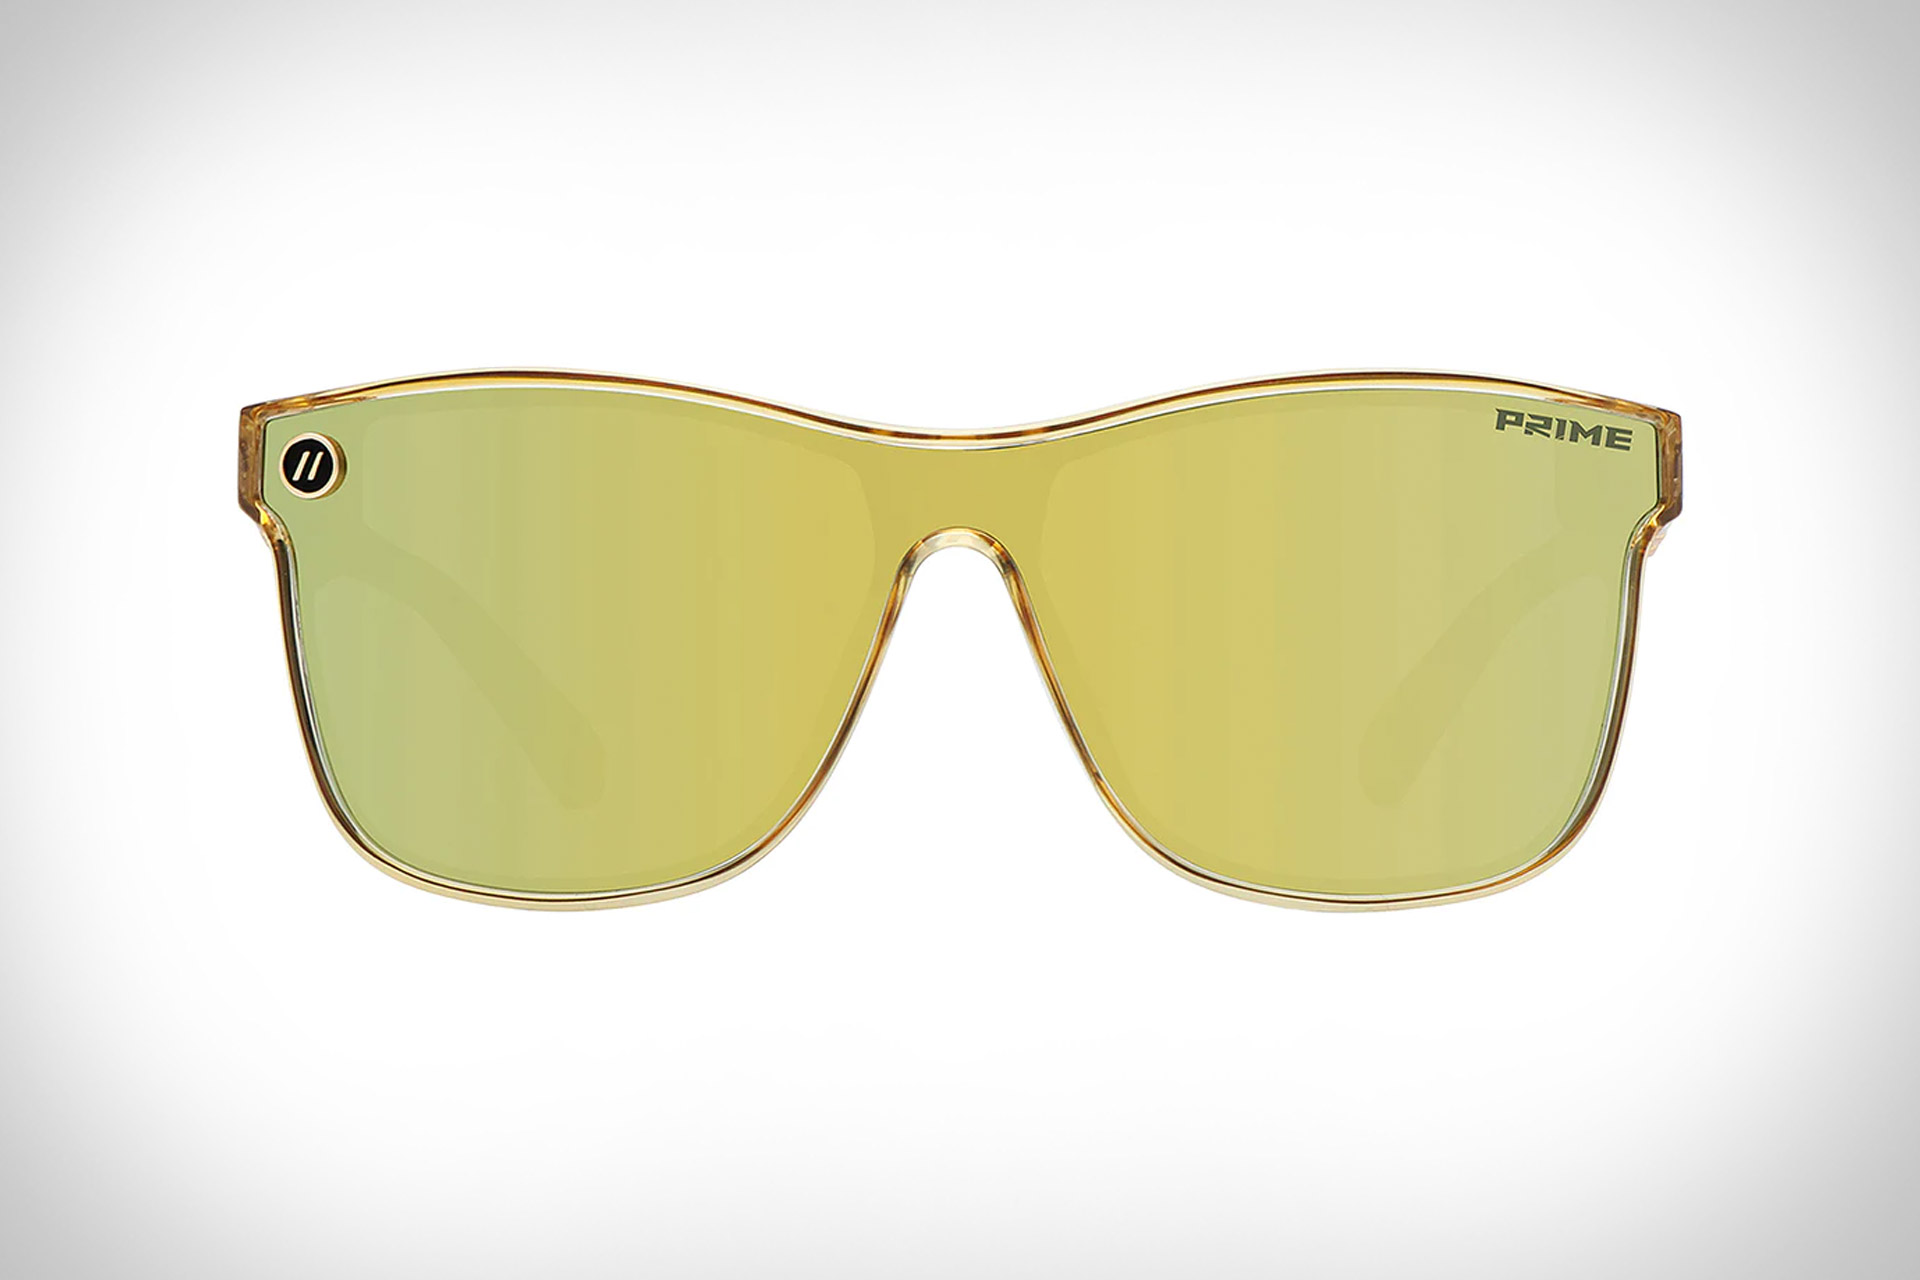 Blenders x Coach Prime Sunglasses, #Blenders #Coach #Prime #Sunglasses